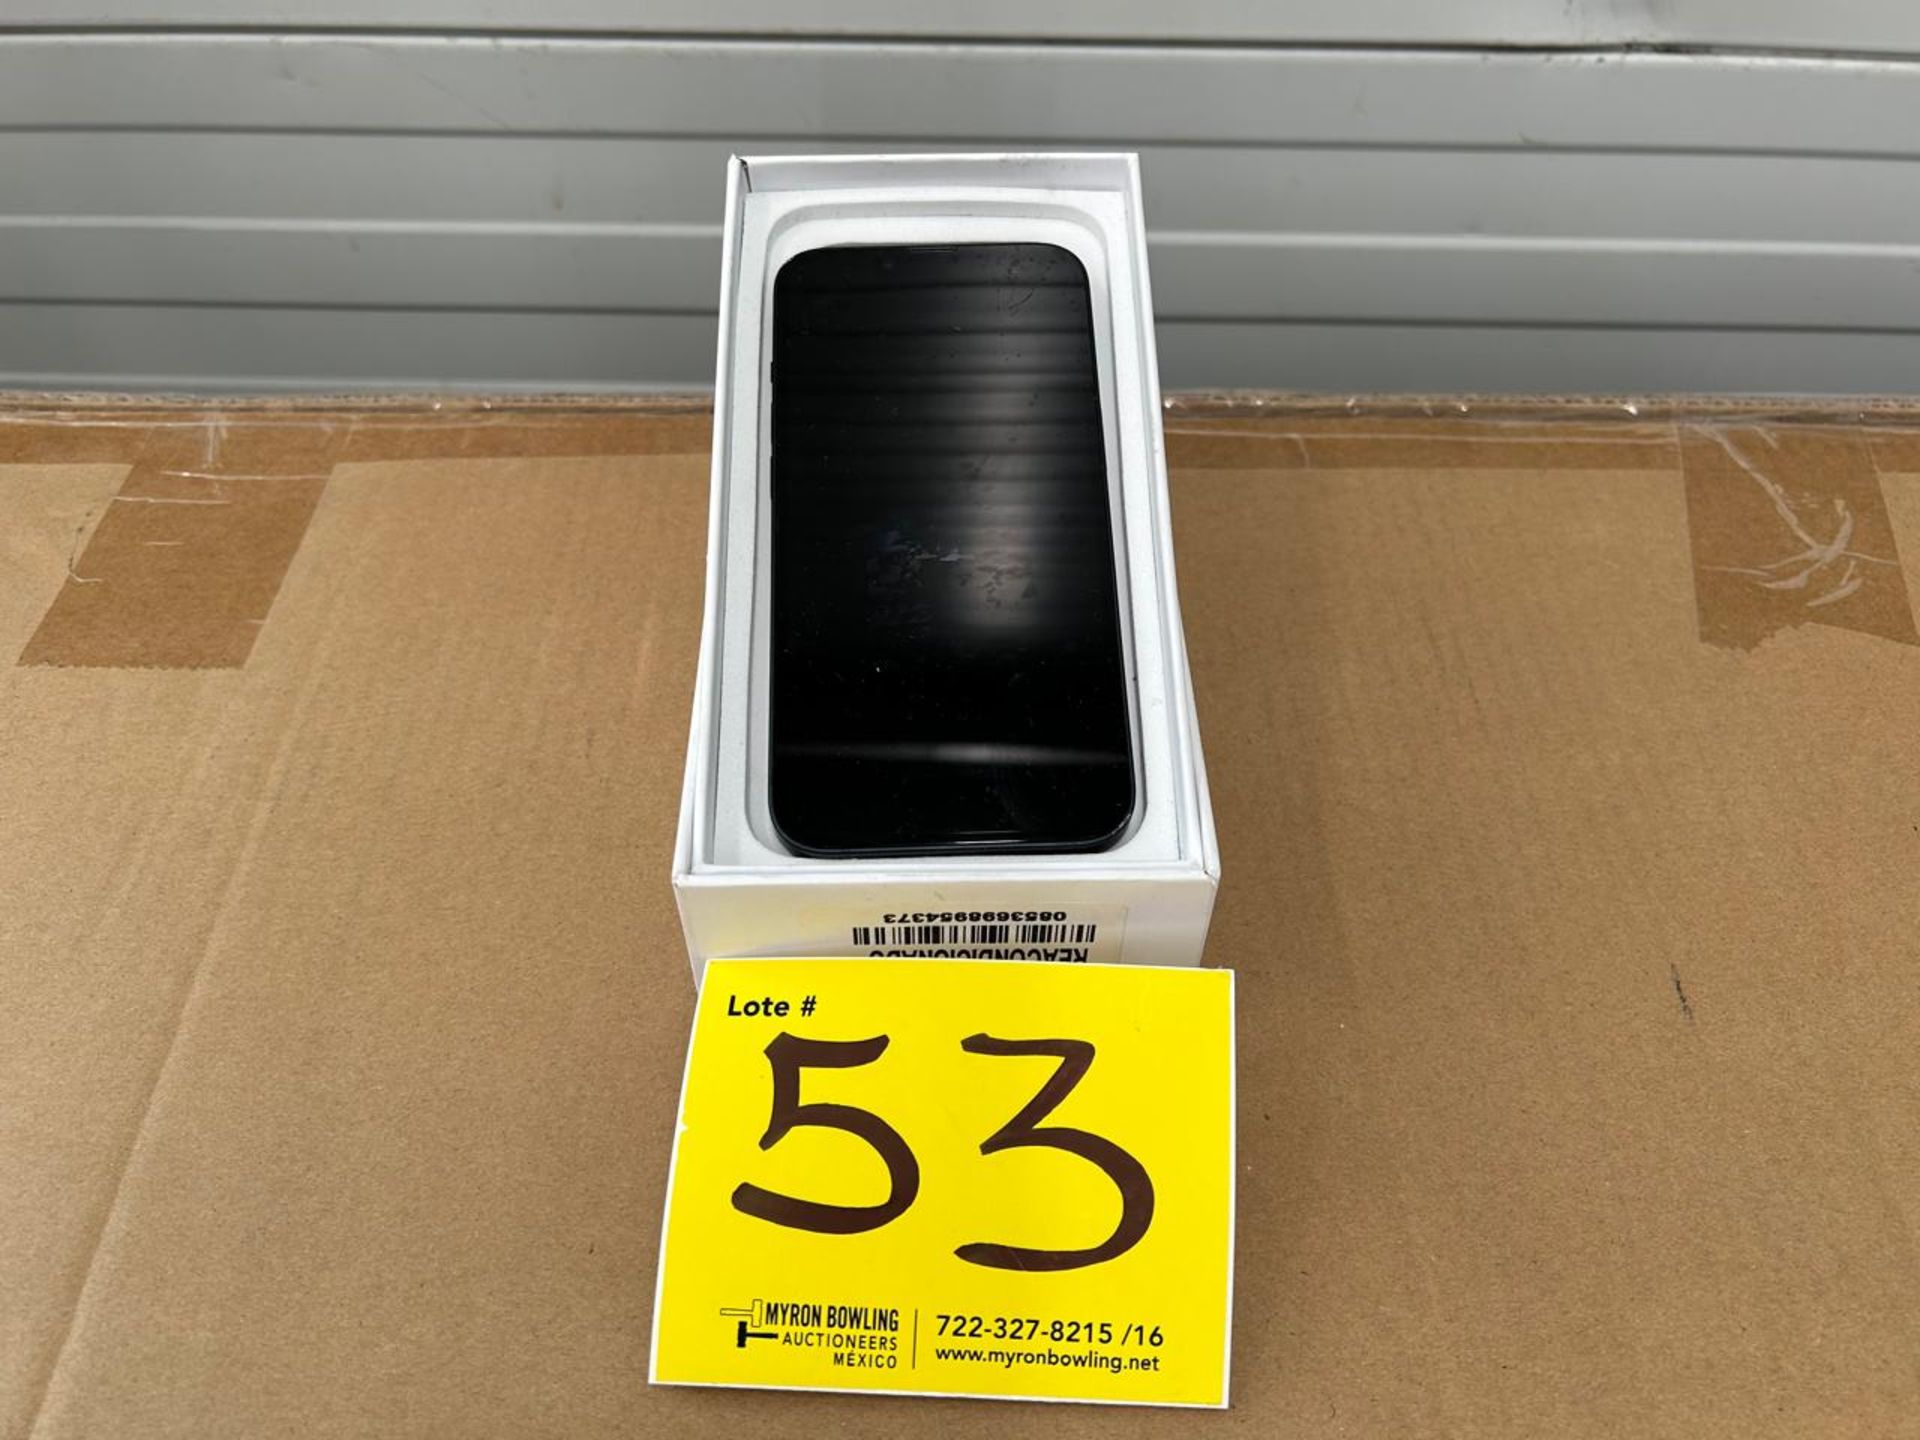 Celular Marca APPLE, Modelo iPhone 13, con capacidad de 128 GB, Color NEGRO (IMEI 356122170067203) - Image 2 of 6